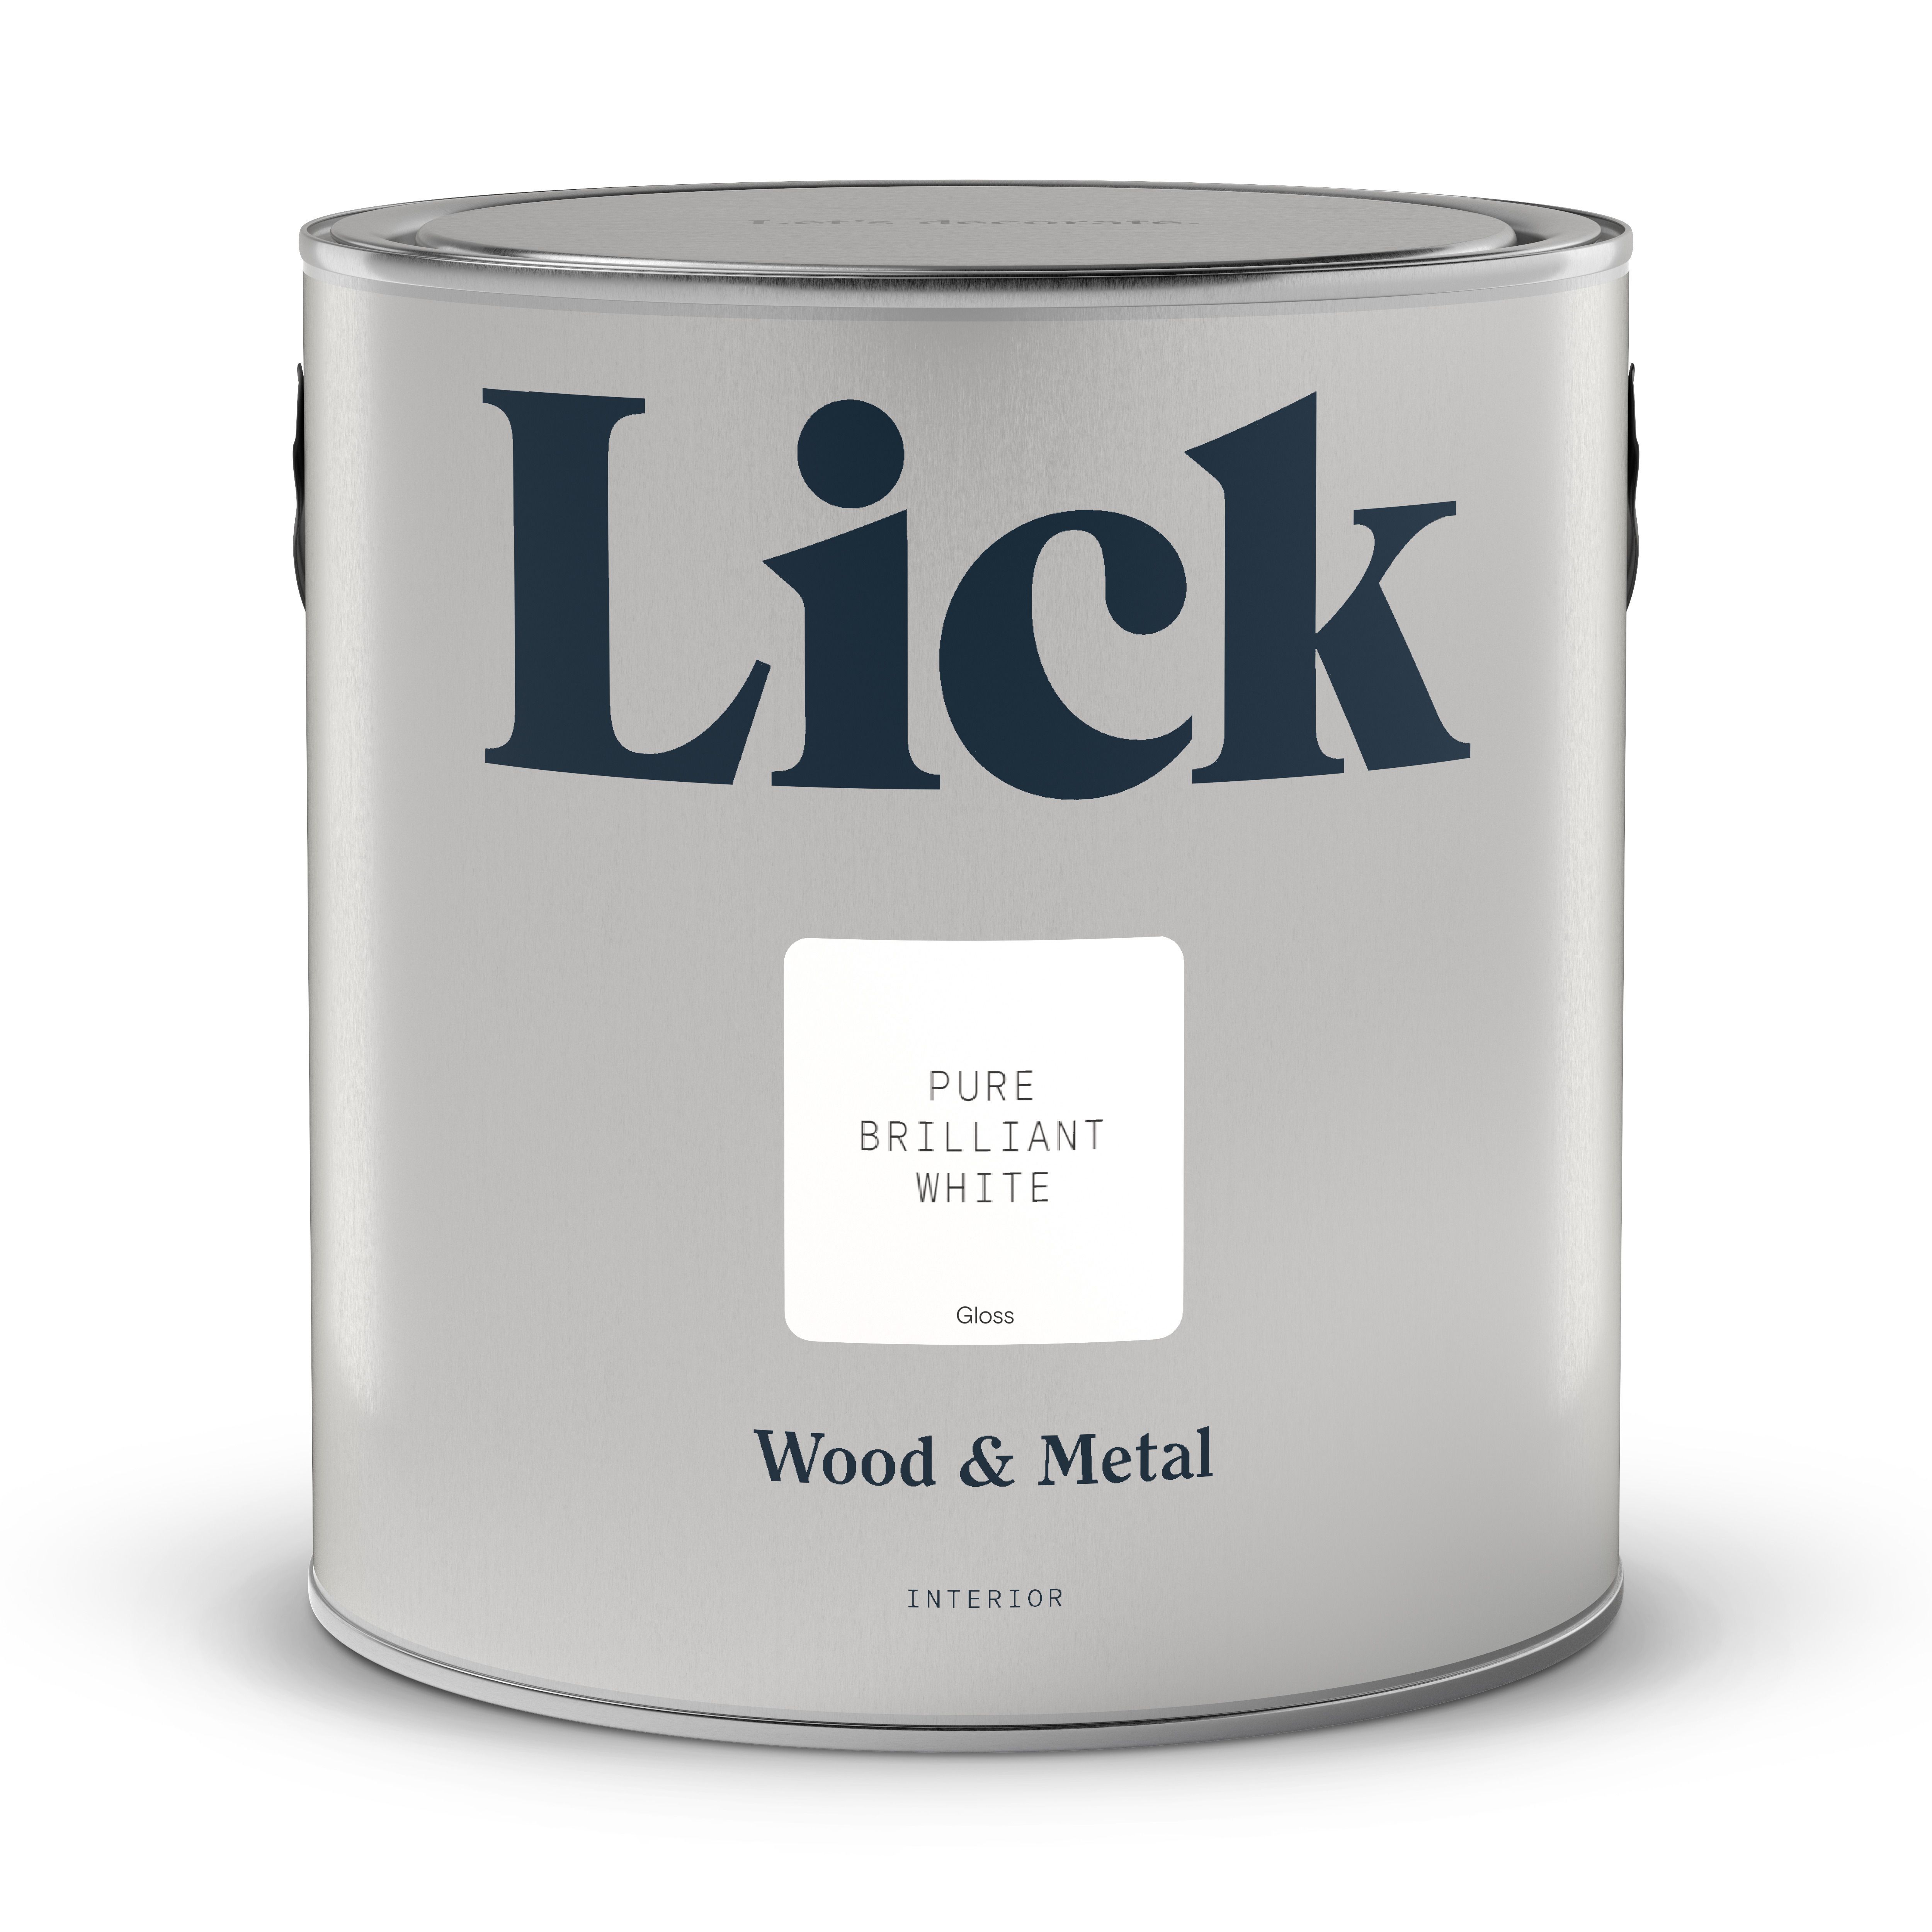 Lick Pure Brilliant White Gloss Metal & wood paint, 2.5L